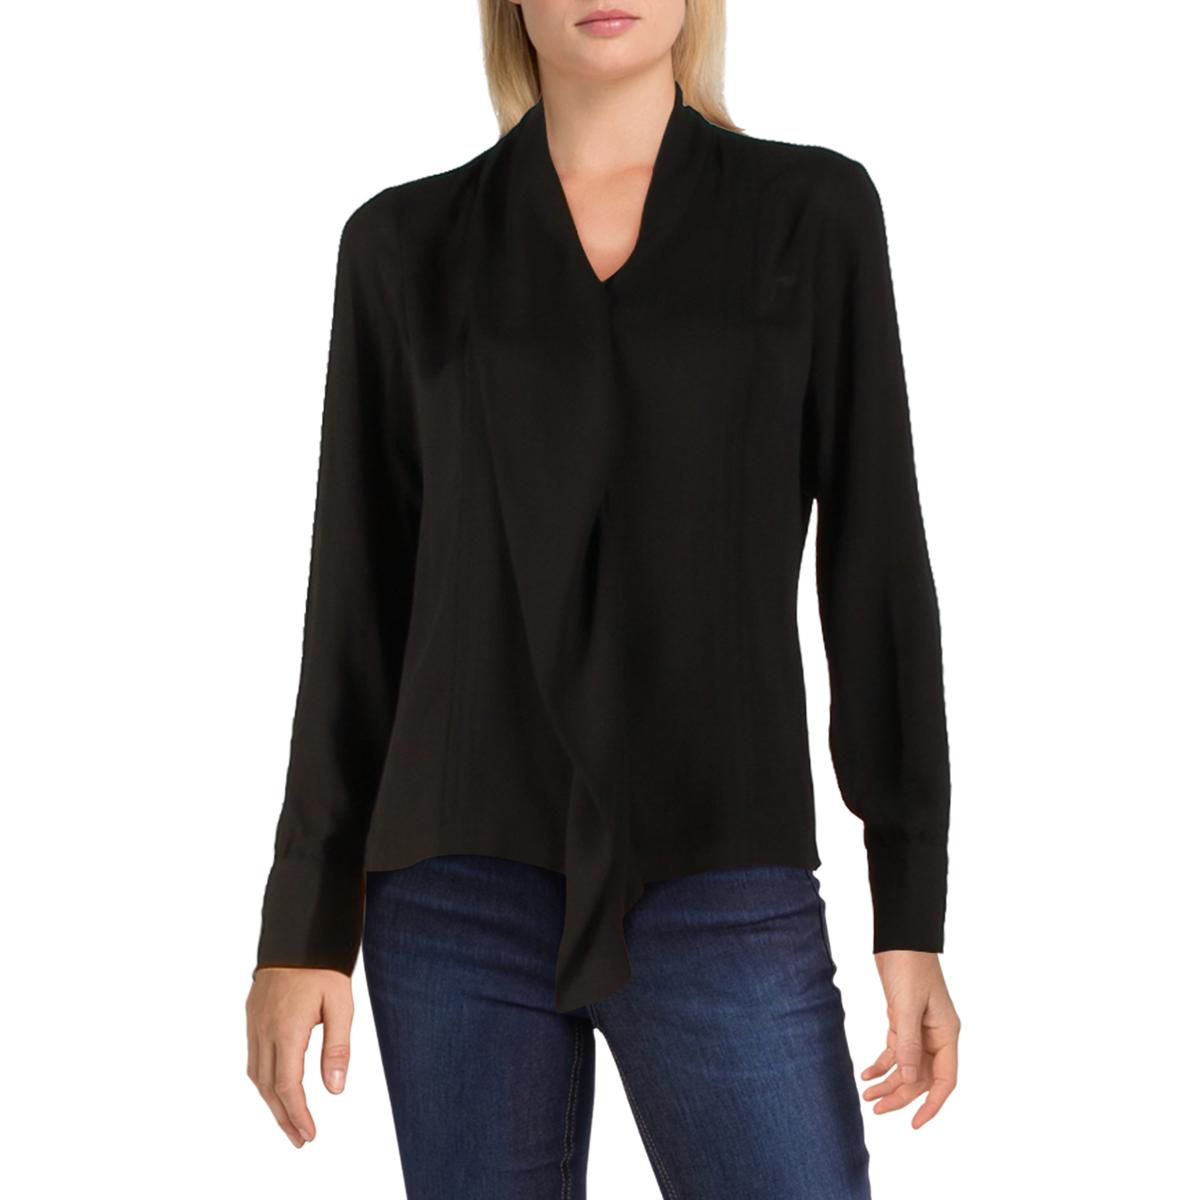 Tahari Womens Black Drapey Collared Top Blouse Shirt M BHFO 0957 | eBay